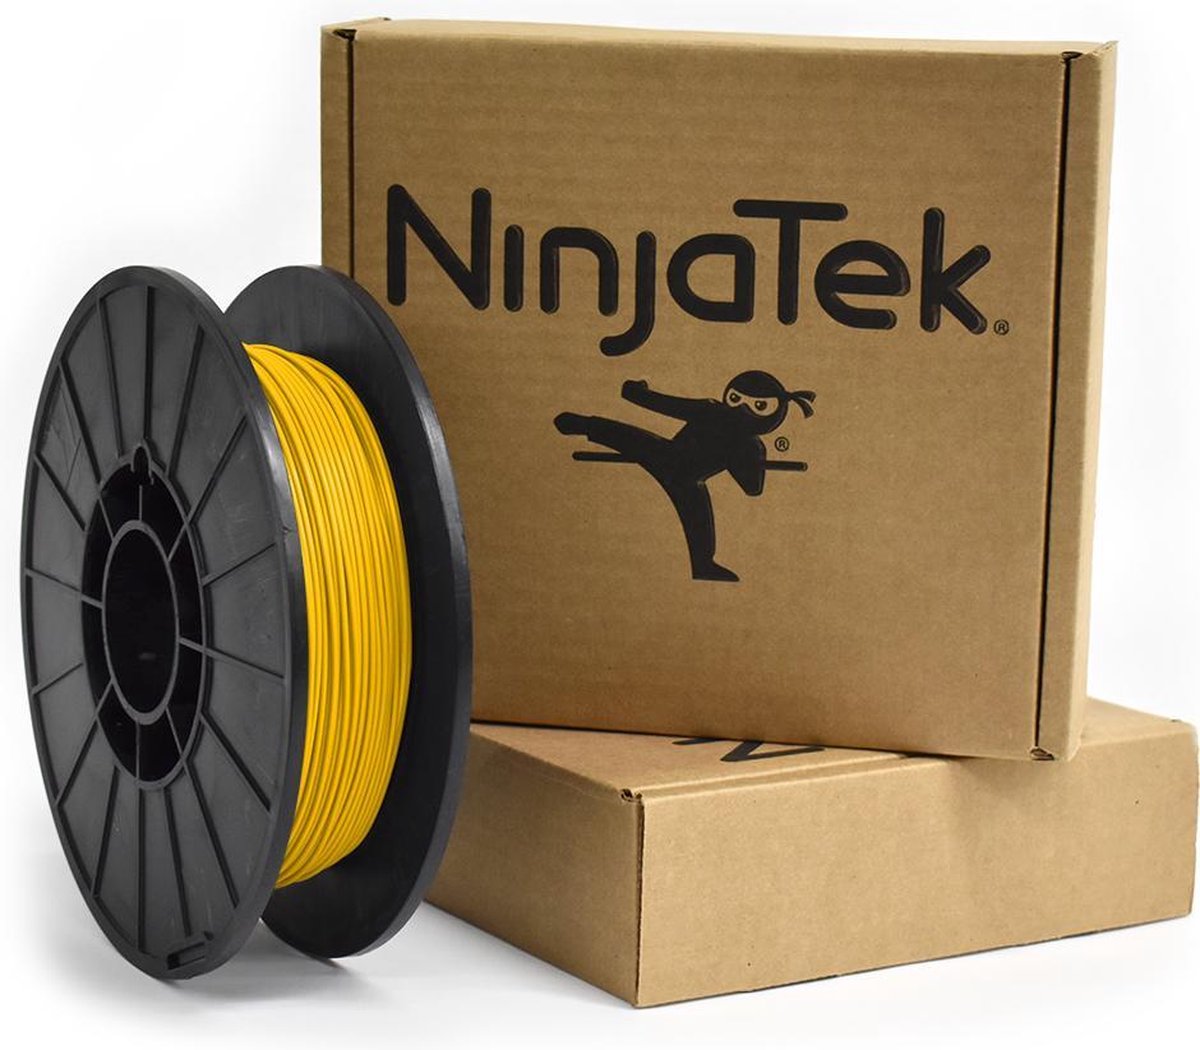 NinjaFlex Filament - 2.85mm - 0.5 kg - Sun Yellow